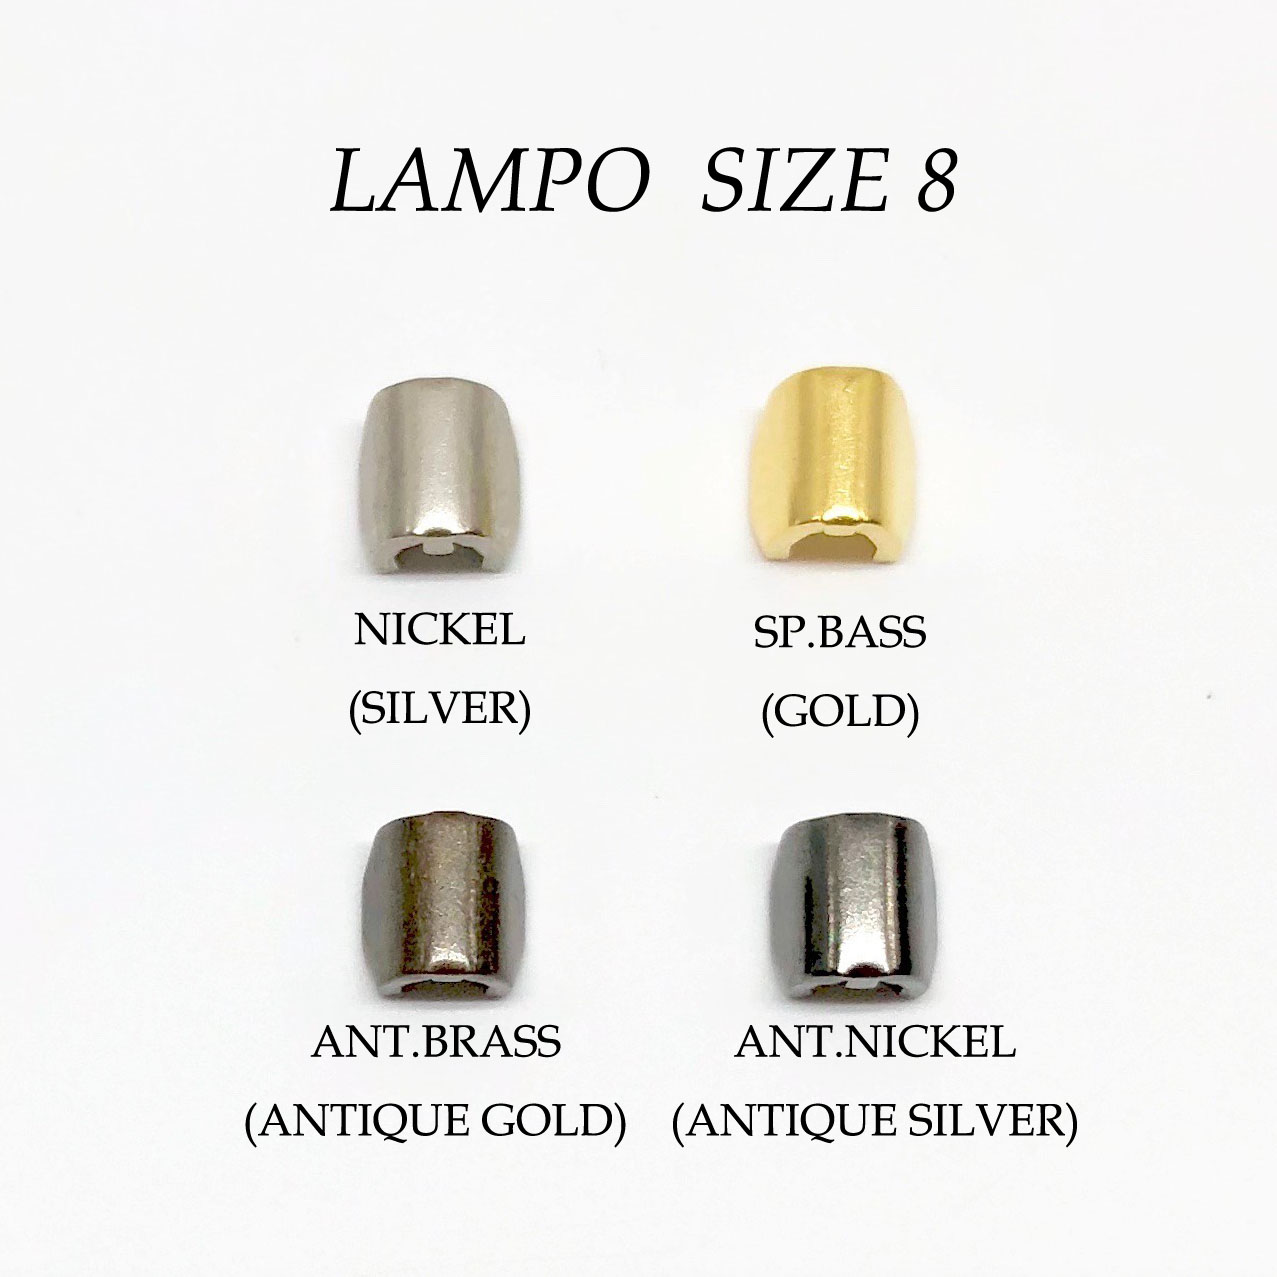 183S 仅适用于 Super LAMPO拉链上止尺寸8 LAMPO(GIOVANNI LANFRANCHI SPA)